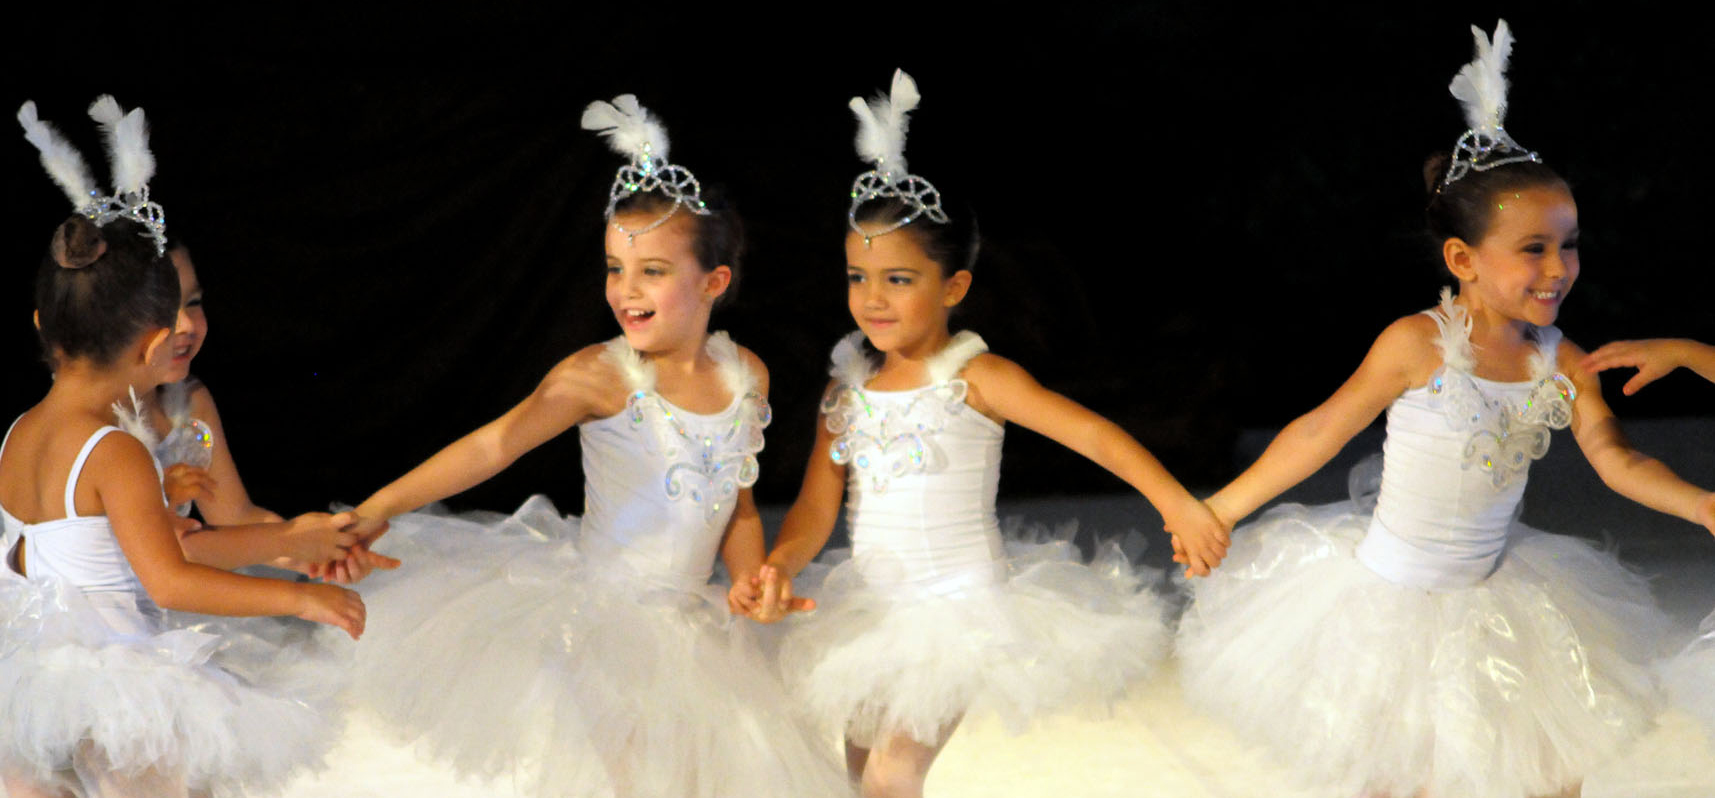 ballet infantil - Ballet - Academia Iris Ativa - Lina Penteado